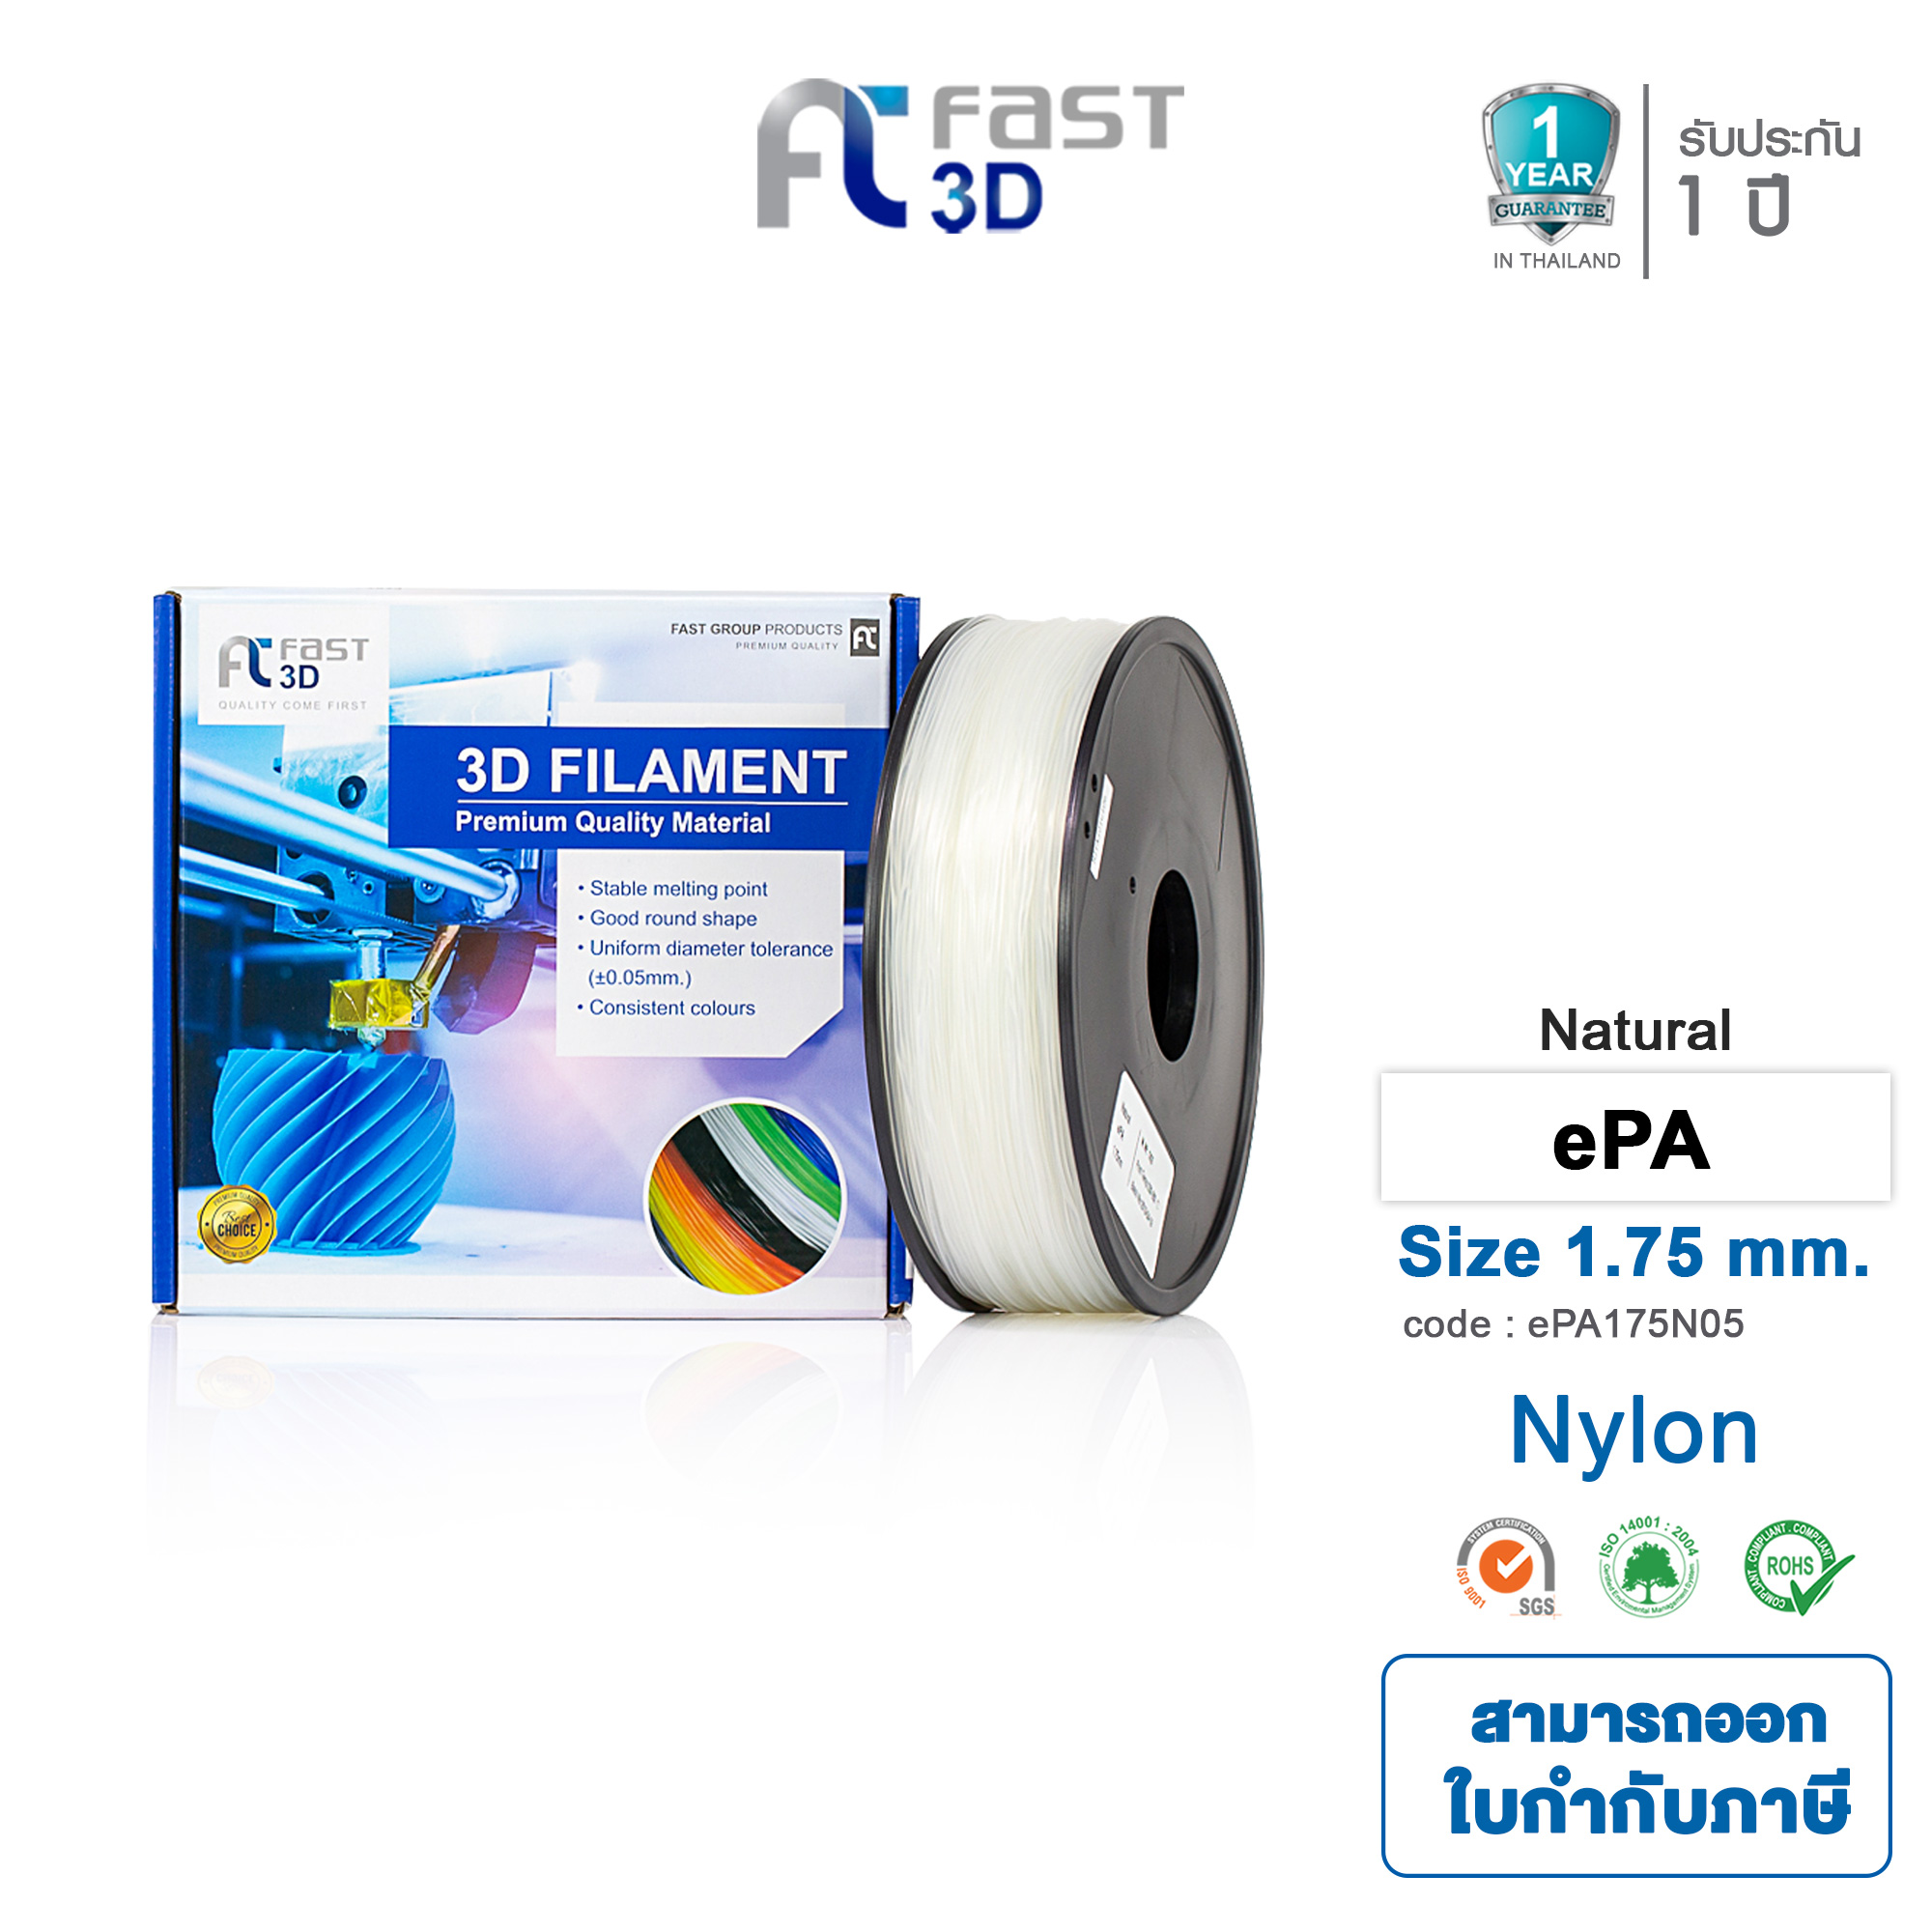 Fast 3D เส้นใยพลาสติก ePA (Nylon High intensity) Filament for 3D Printer Size 1.75 mm. 1 kg. Natural [ จัดส่งฟรี!! ]